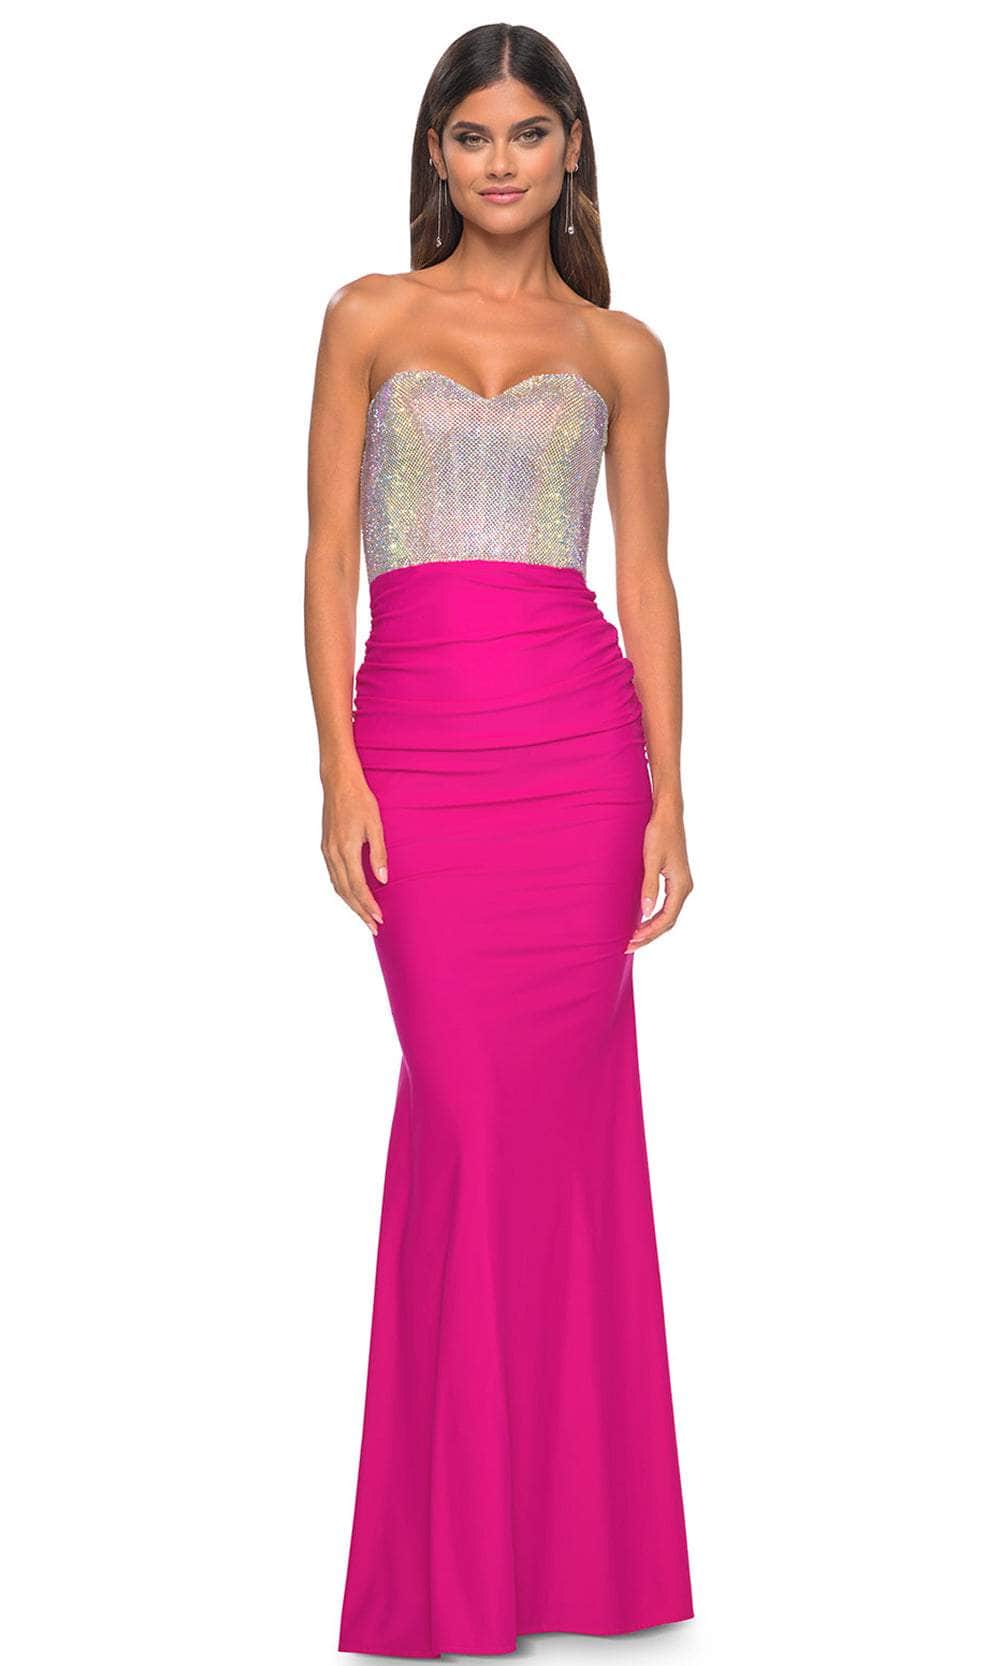 La Femme 32440 - Strapless Rhinestone Prom Dress Prom Dresses 00 / Hot Fuchsia